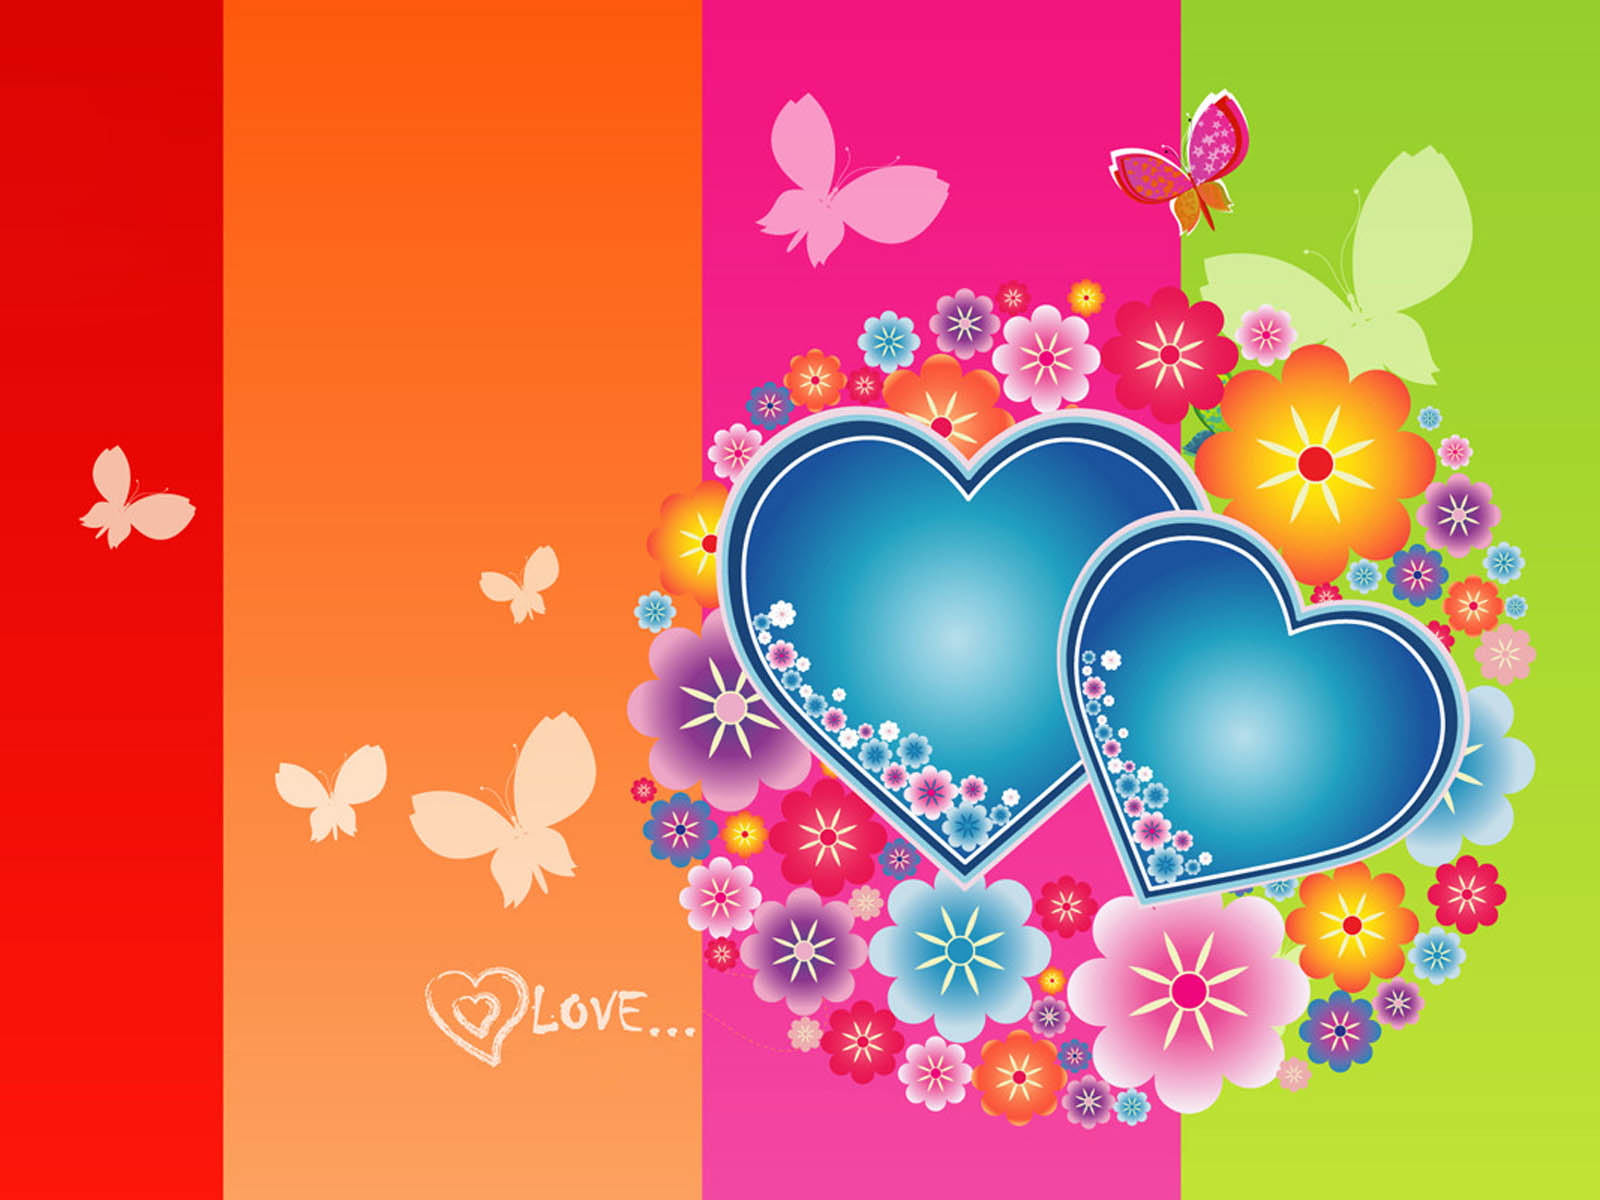 love heart wallpaper hd for desktop